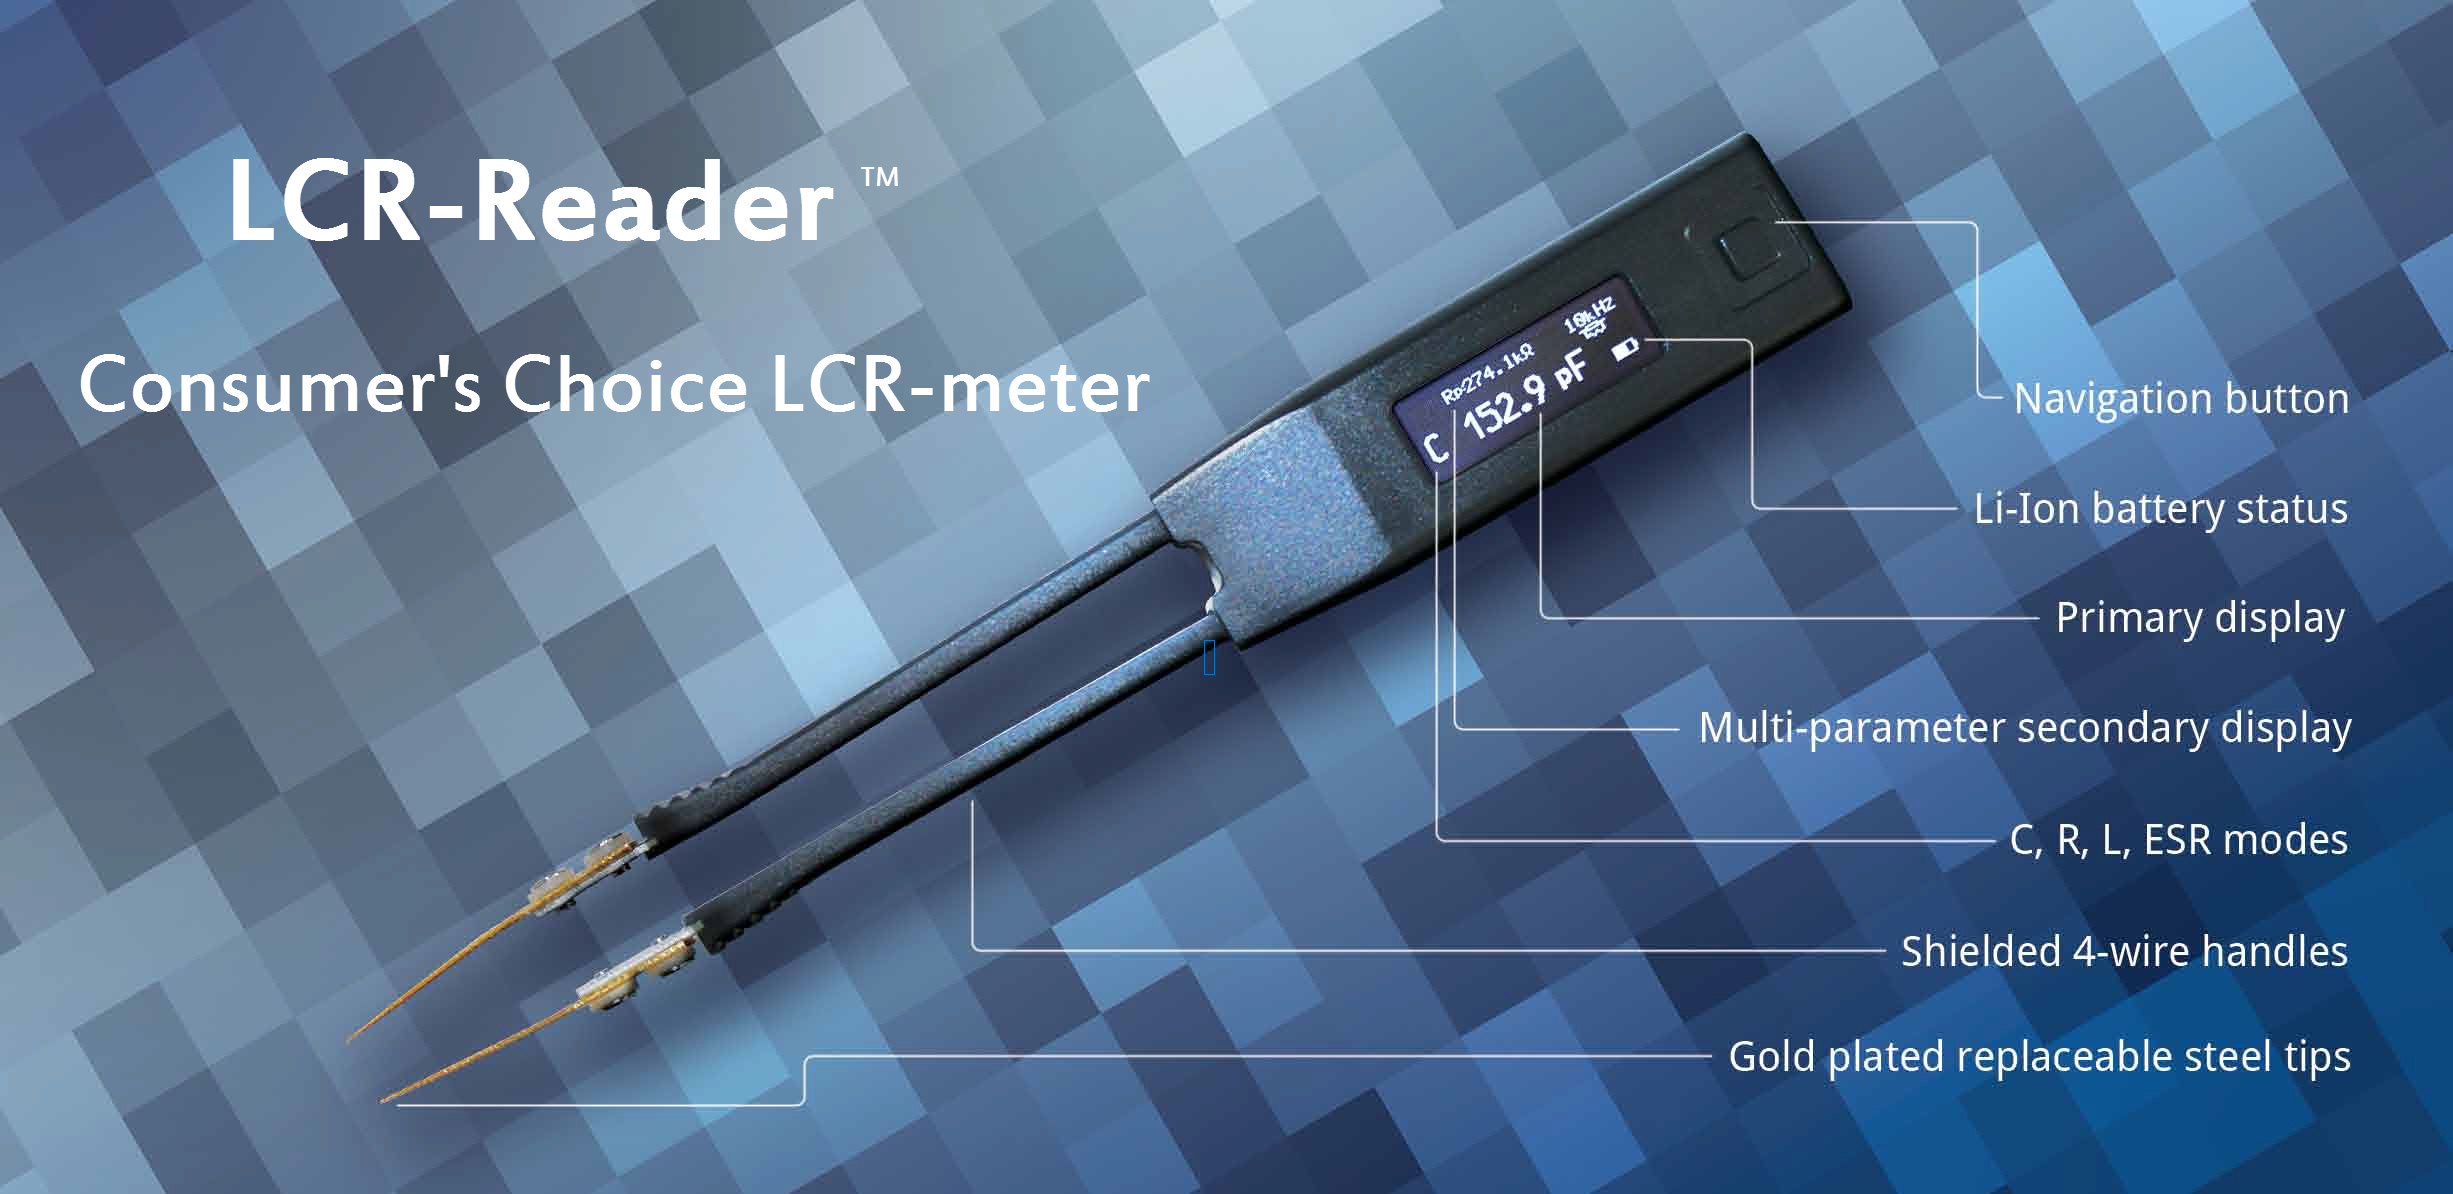 LCR-Reader Akin to Smart Tweezers LCR-meter